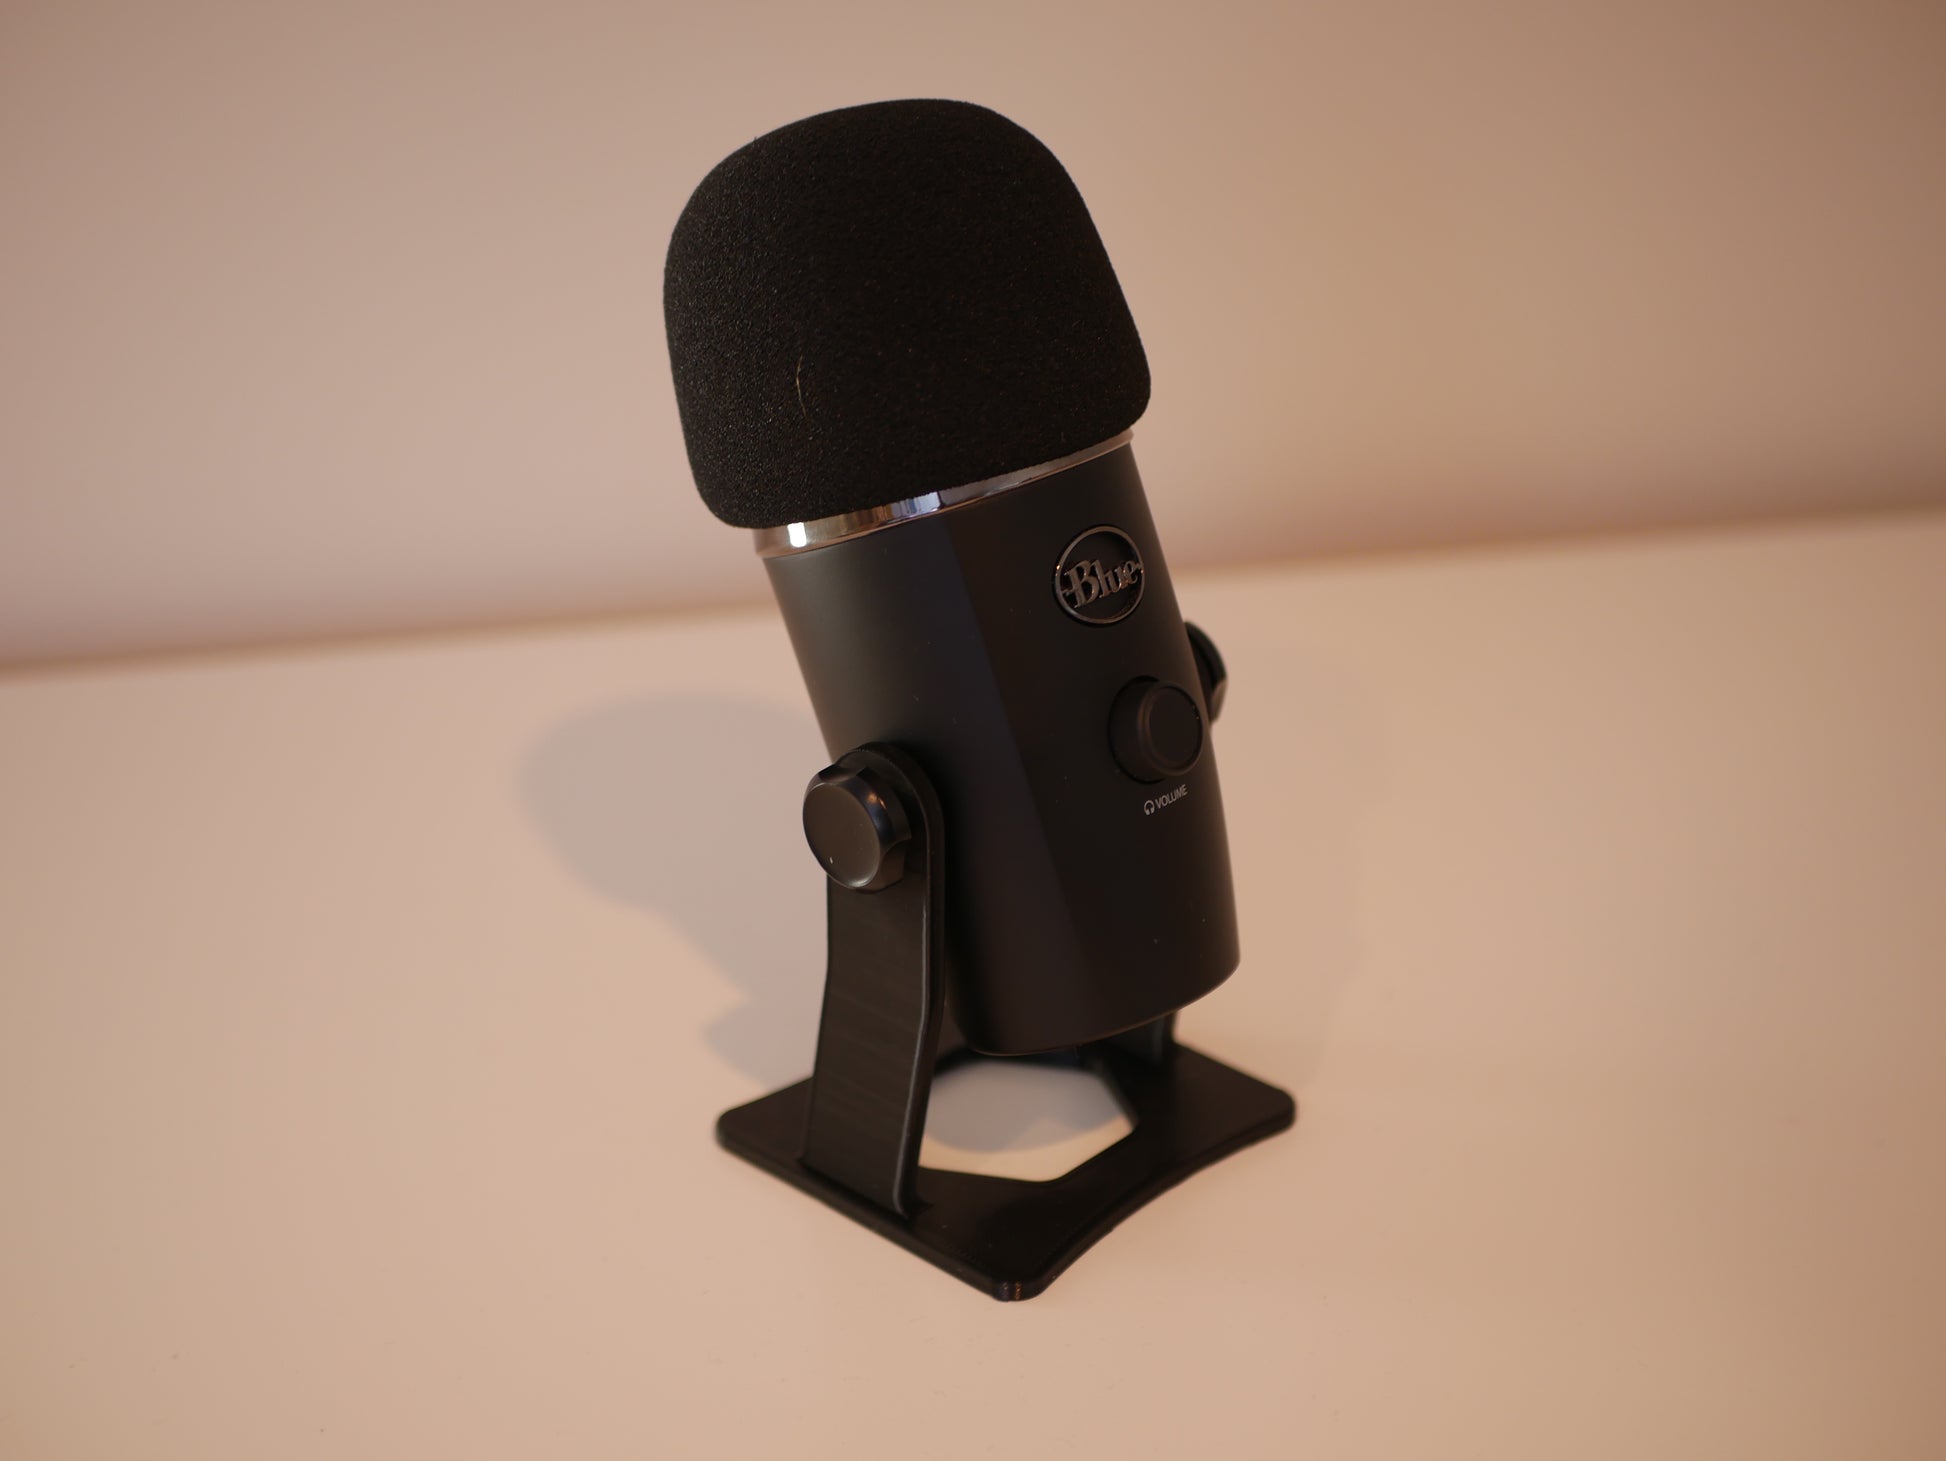 Blue Yeti Nano Microphone — Specs, Price, Pros & Cons